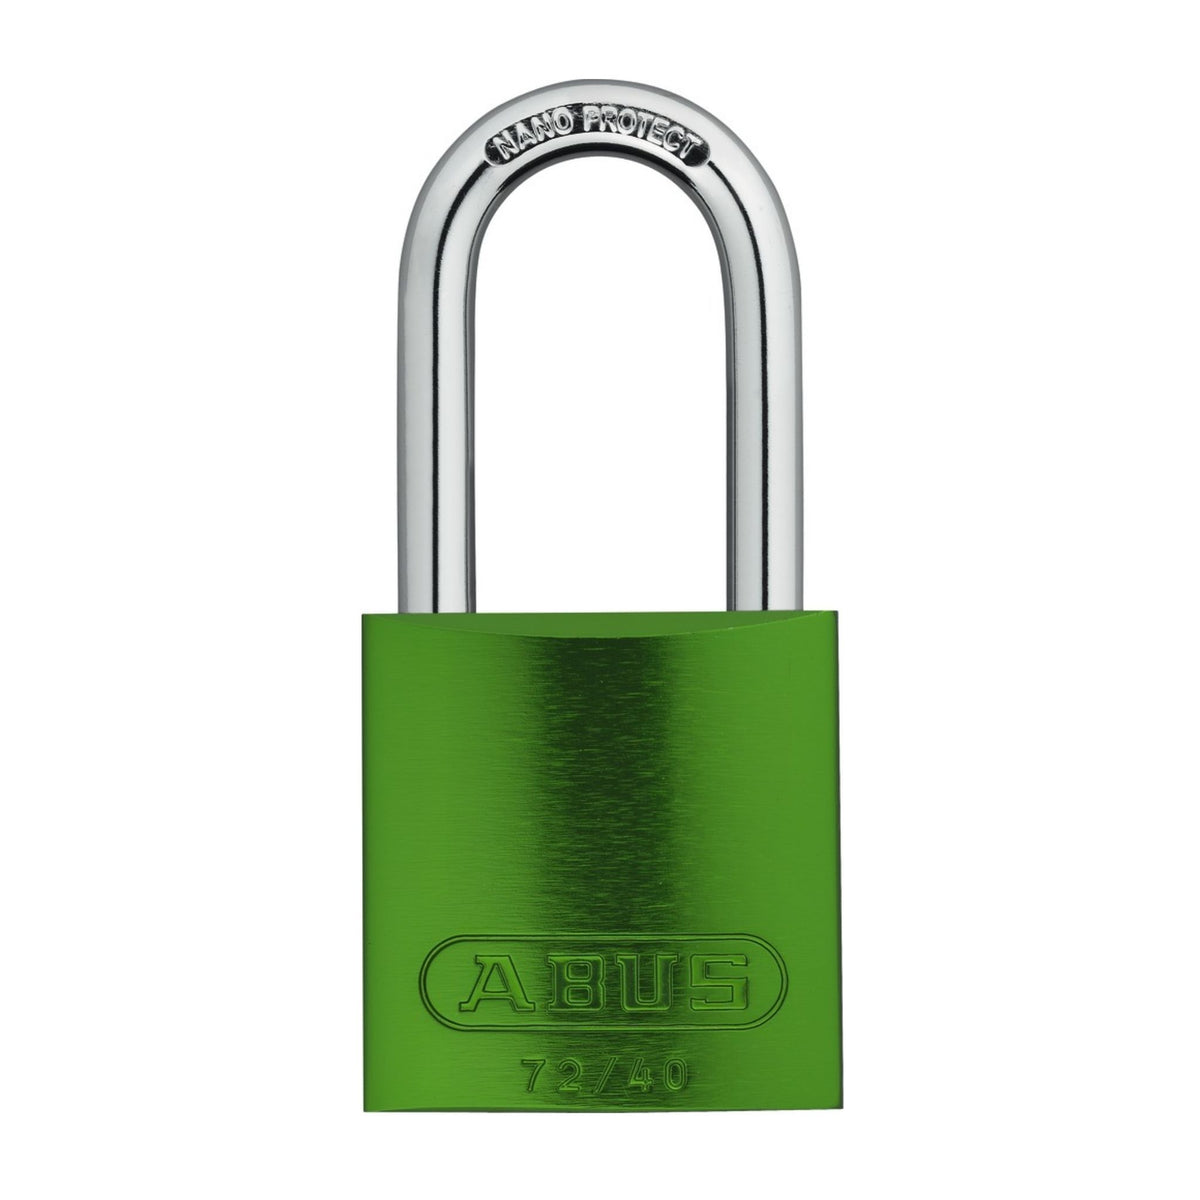 Abus 72/40 KAX12 Green Titalium Safety Padlock Keyed Alike in Set-of-12 Locks - The Lock Source 